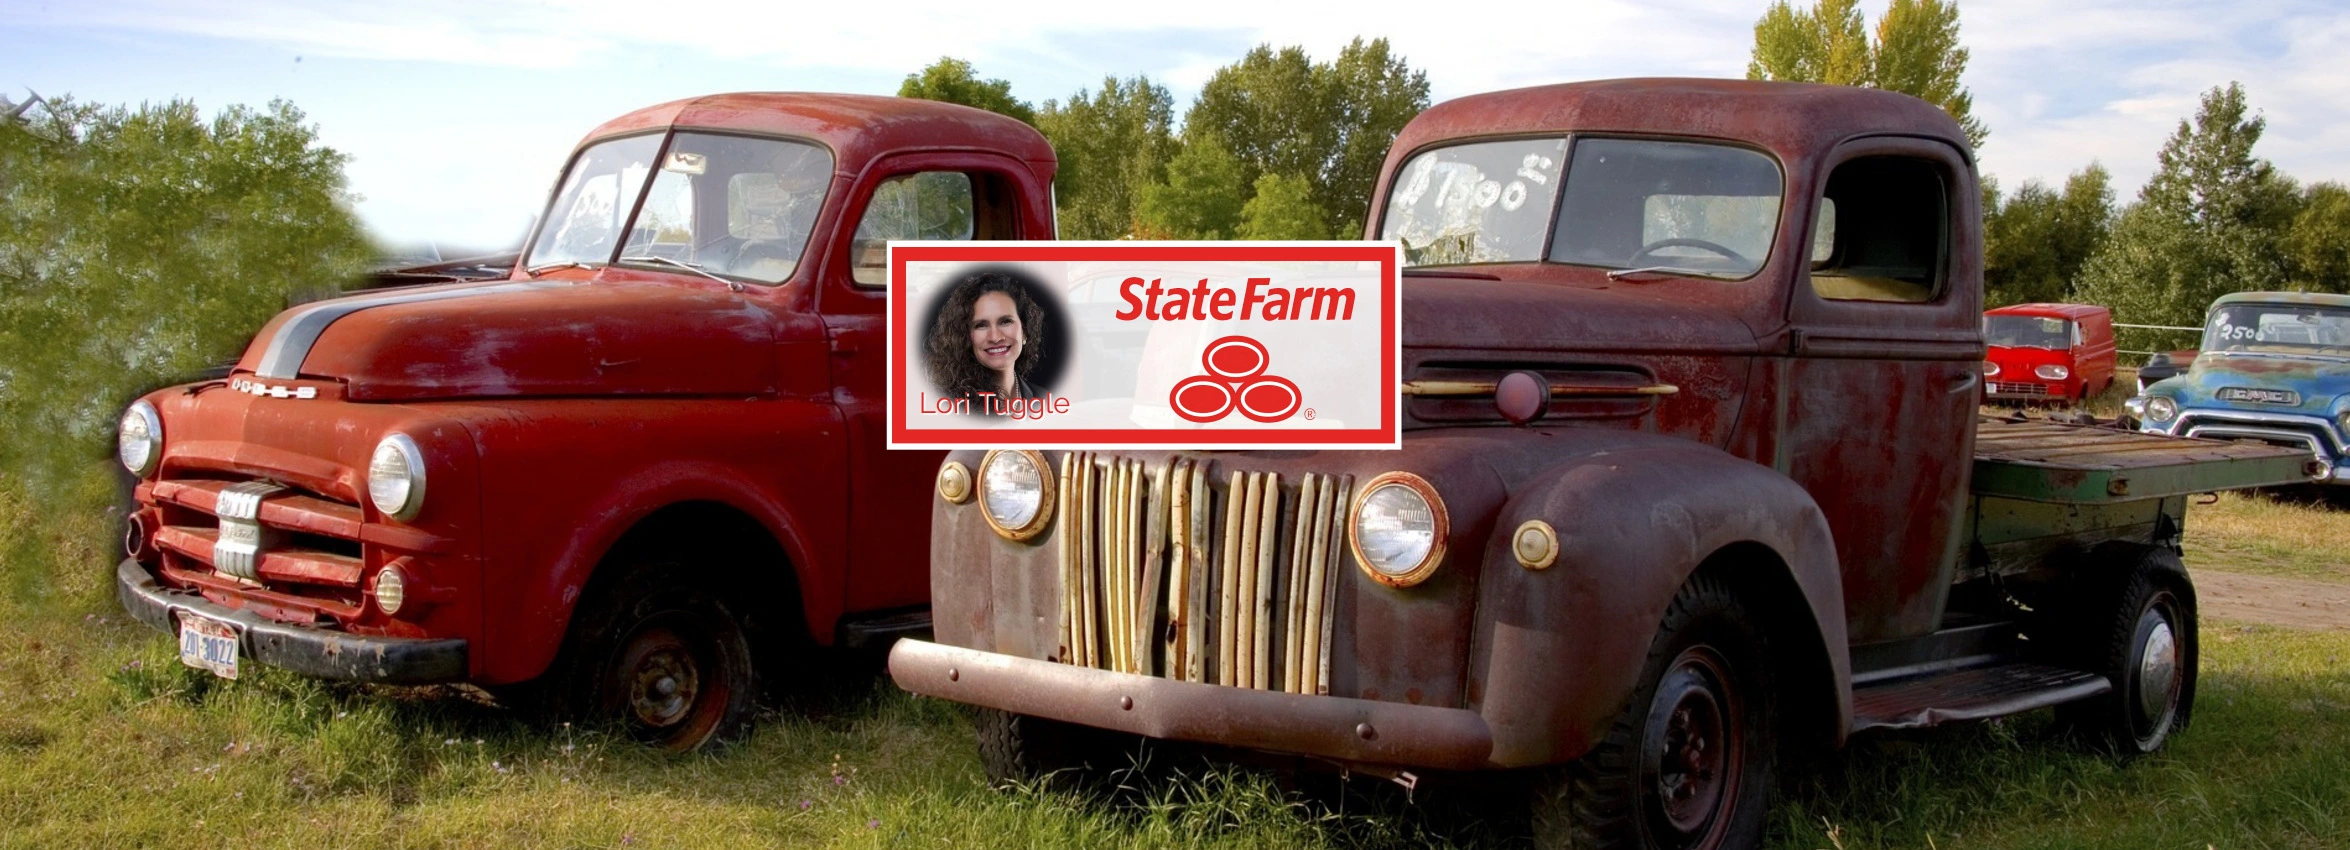 Lori-Tuggle-State-Farm-Ins_Desktop_ET